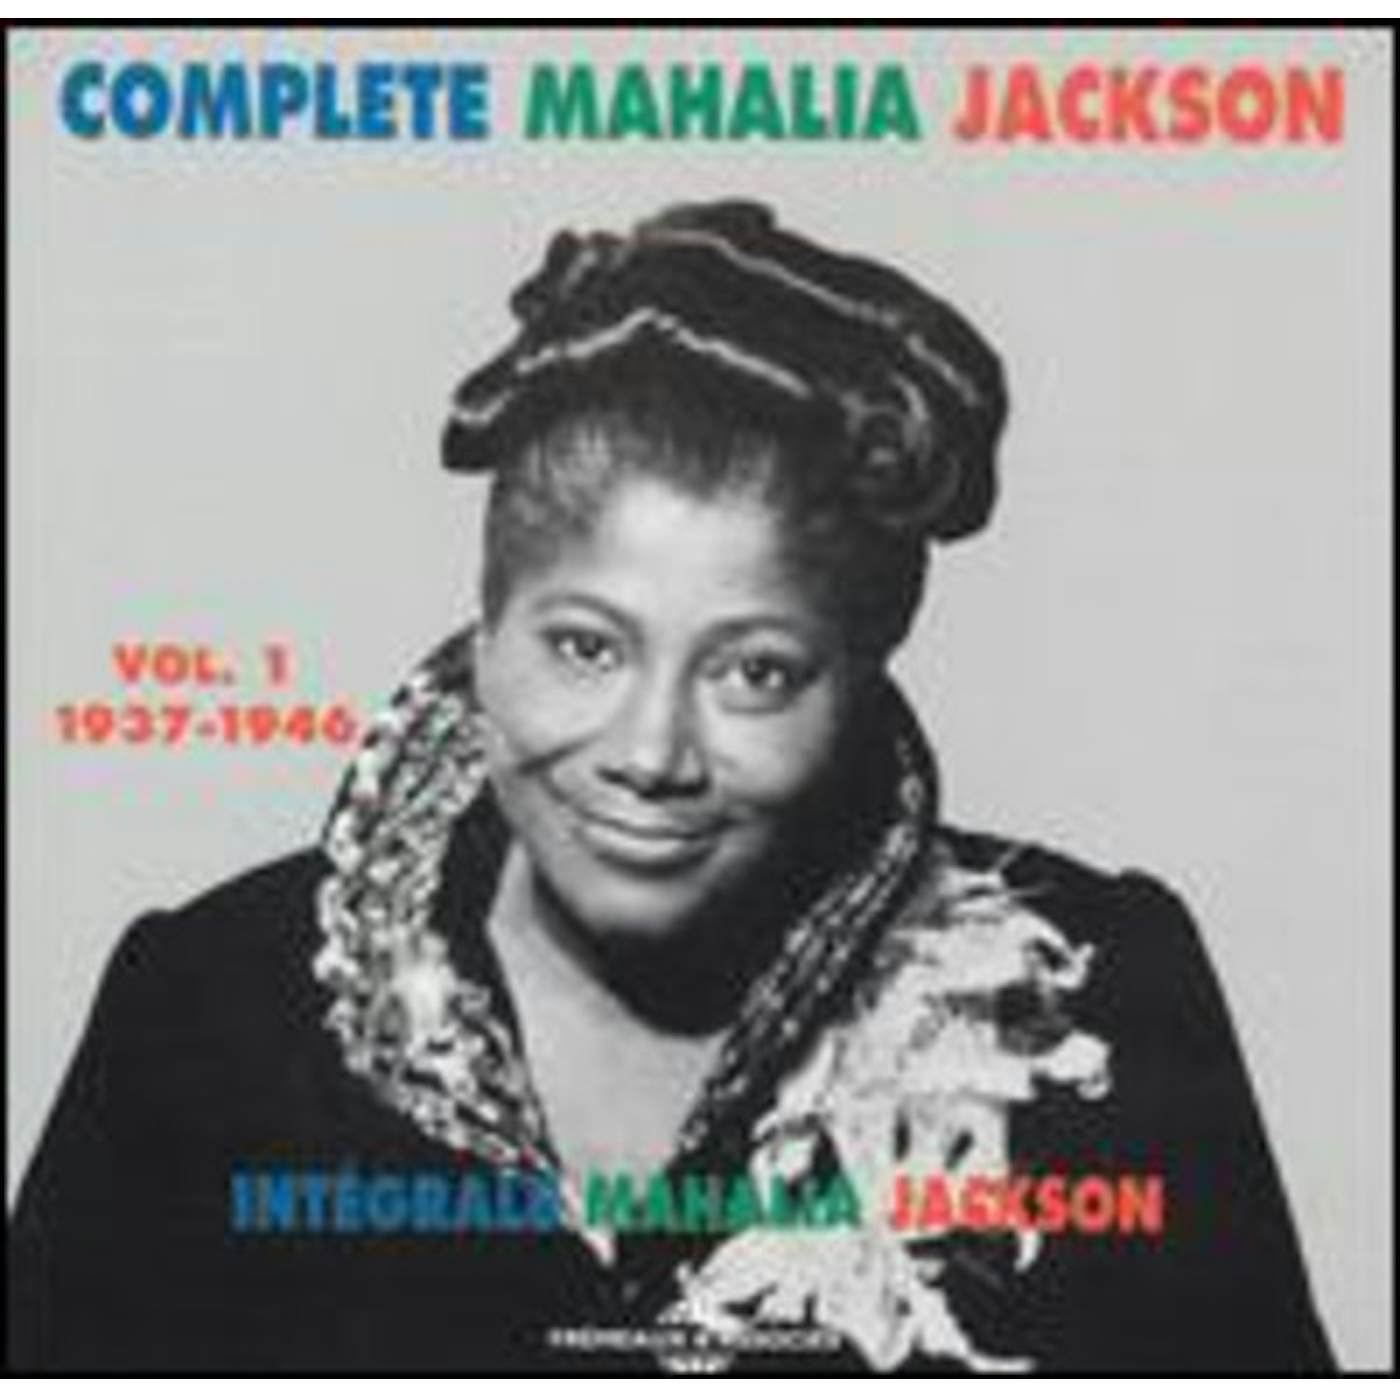 INTEGRALE MAHALIA JACKSON 1 1937-1946 CD